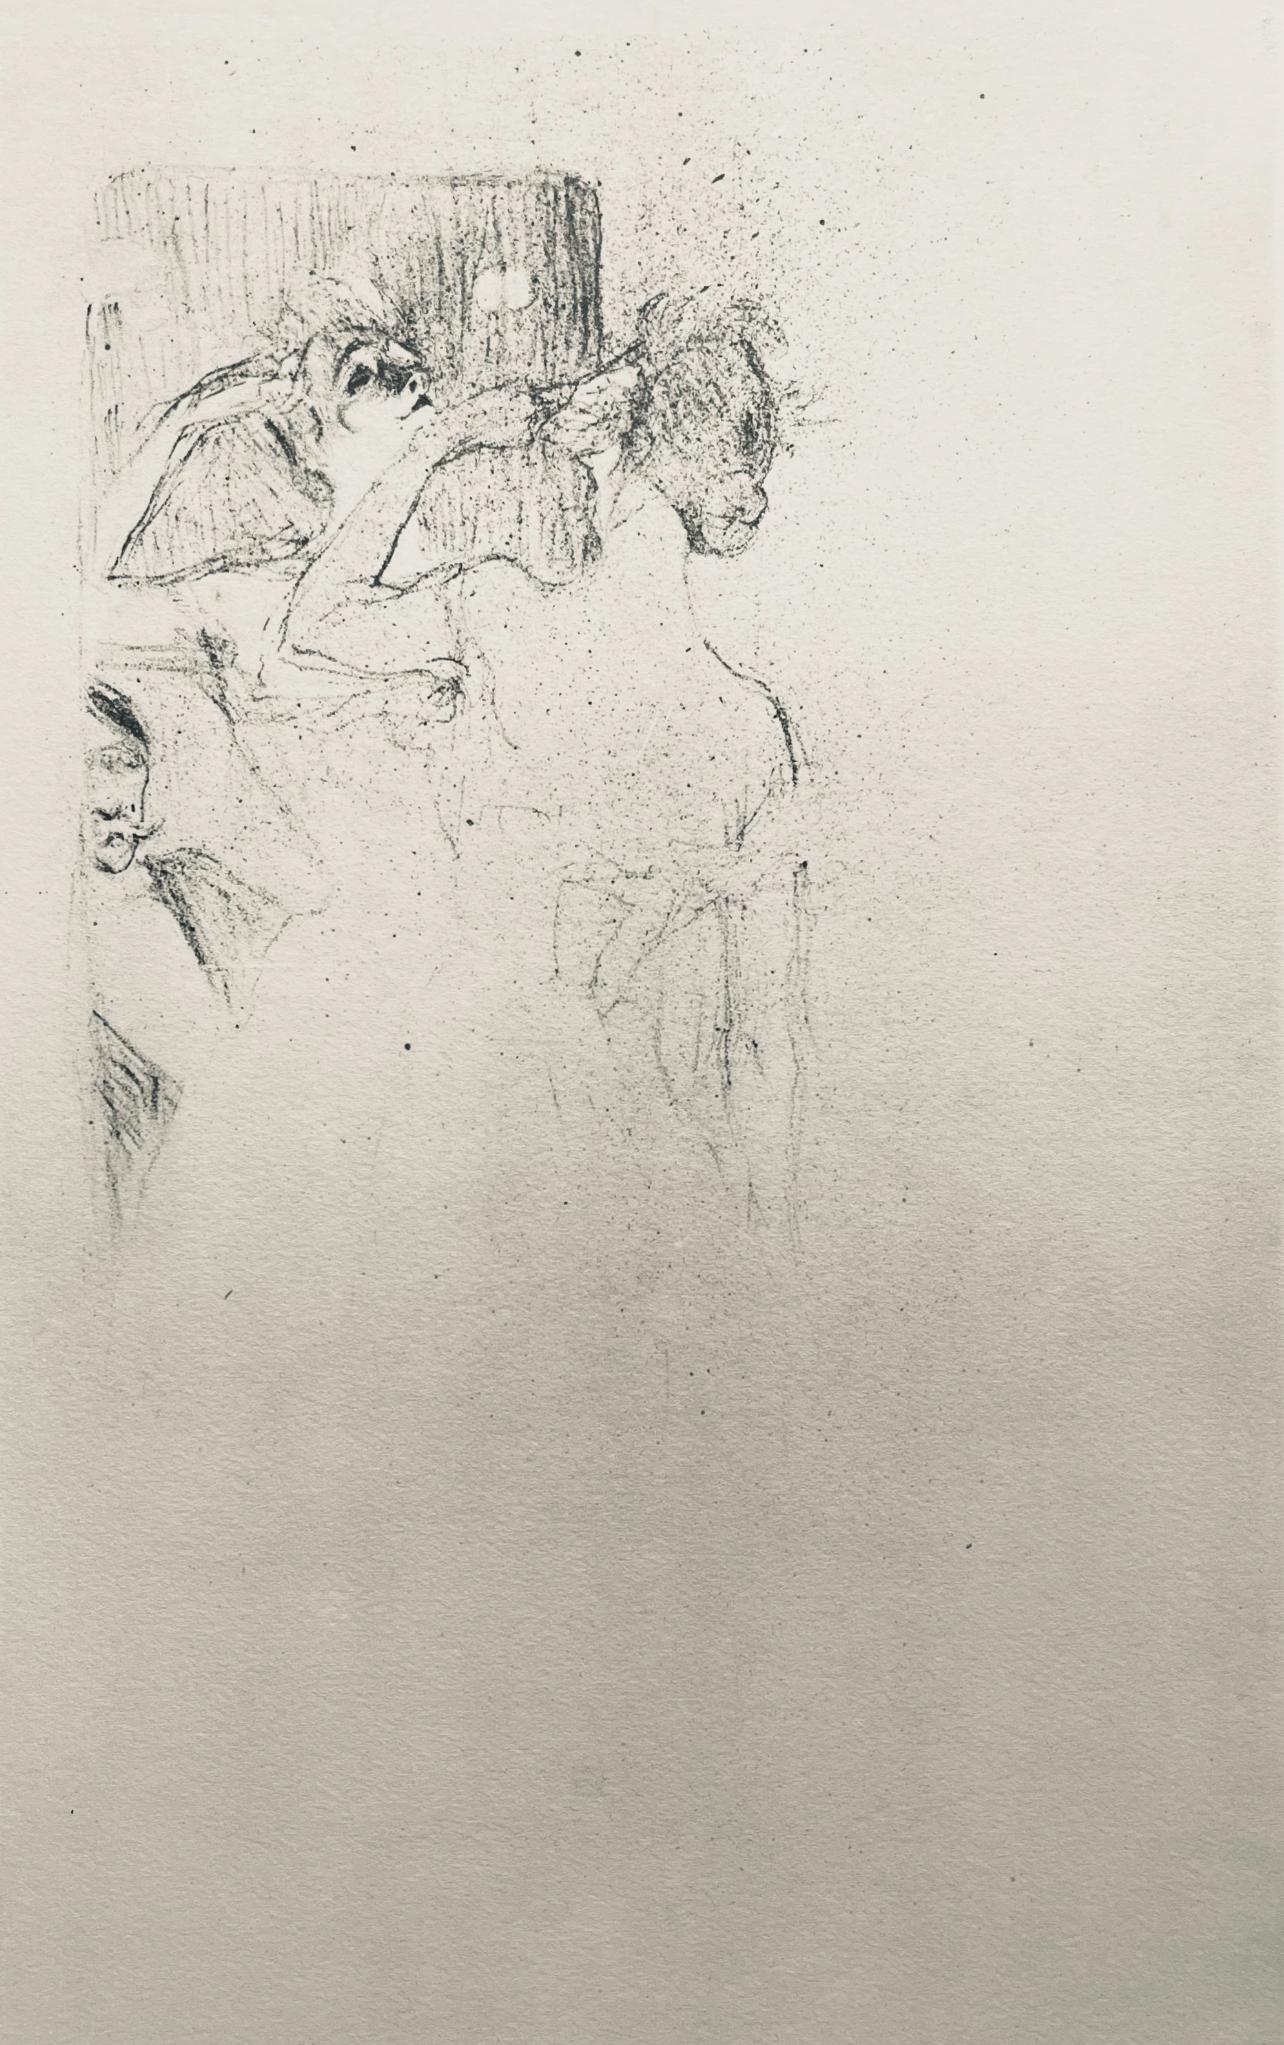 Toulouse-Lautrec, Composición, Yvette Guilbert vista por Toulouse-Lautrec (después)